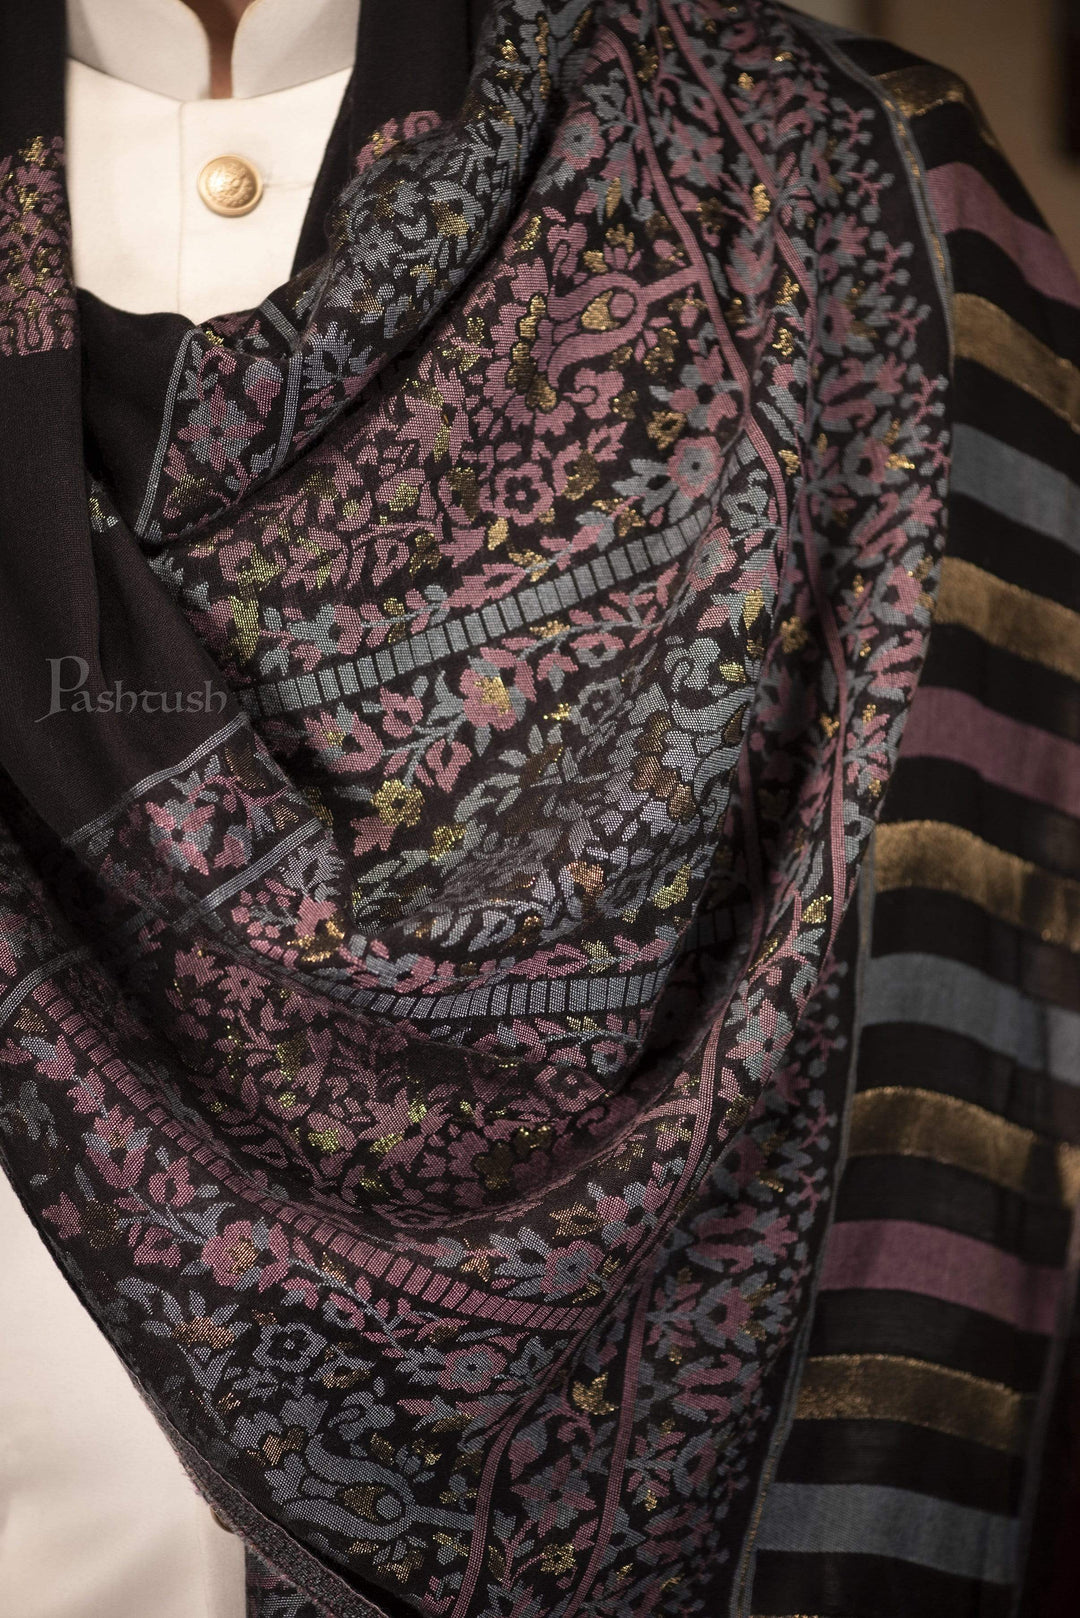 Pashtush India 70x200 Pashtush Mens Paisley Design, Soft Bamboo Scarf, Golden Zari Thread Weave